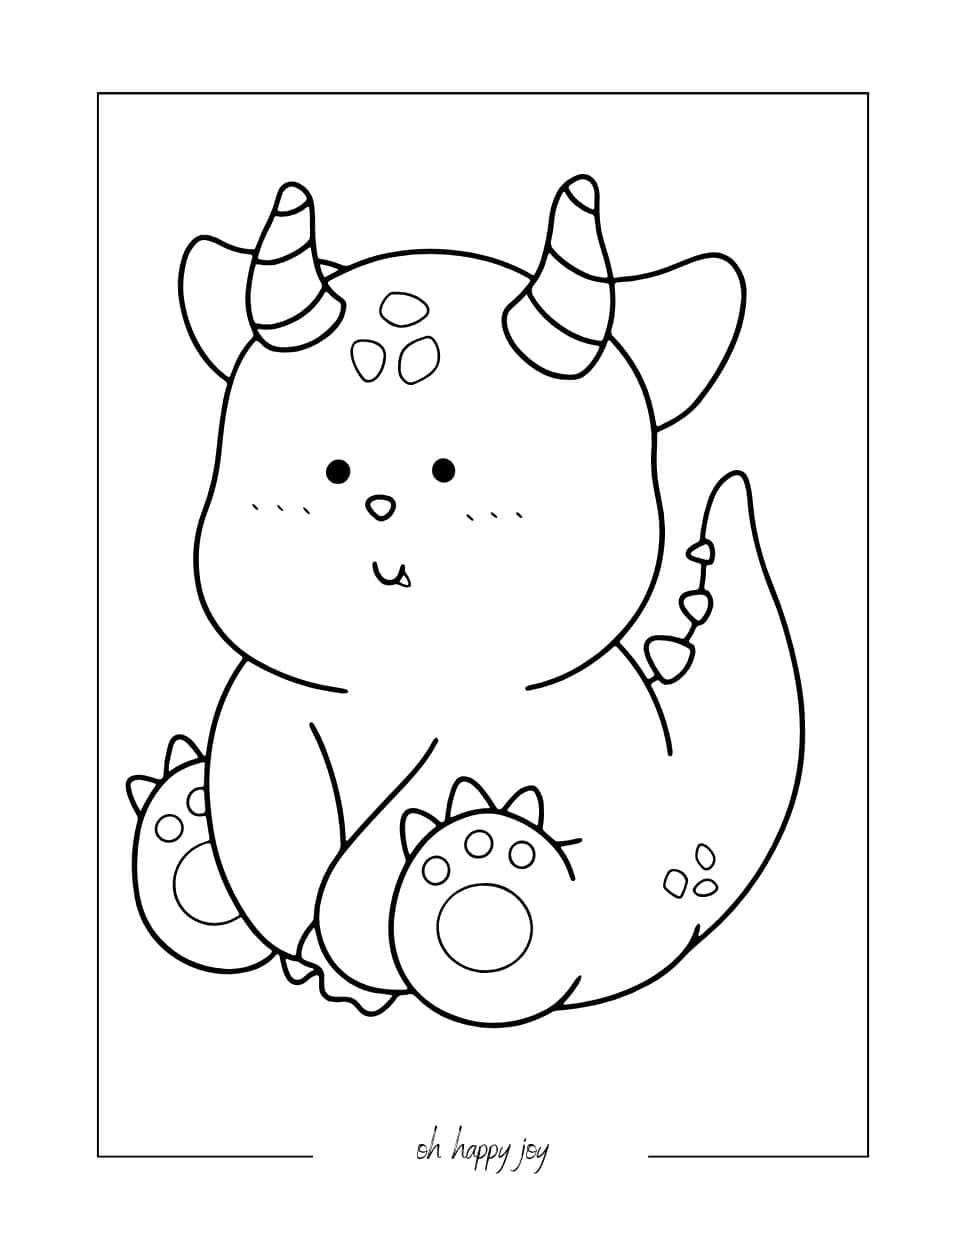 Cute Fat Dragon Coloring Page